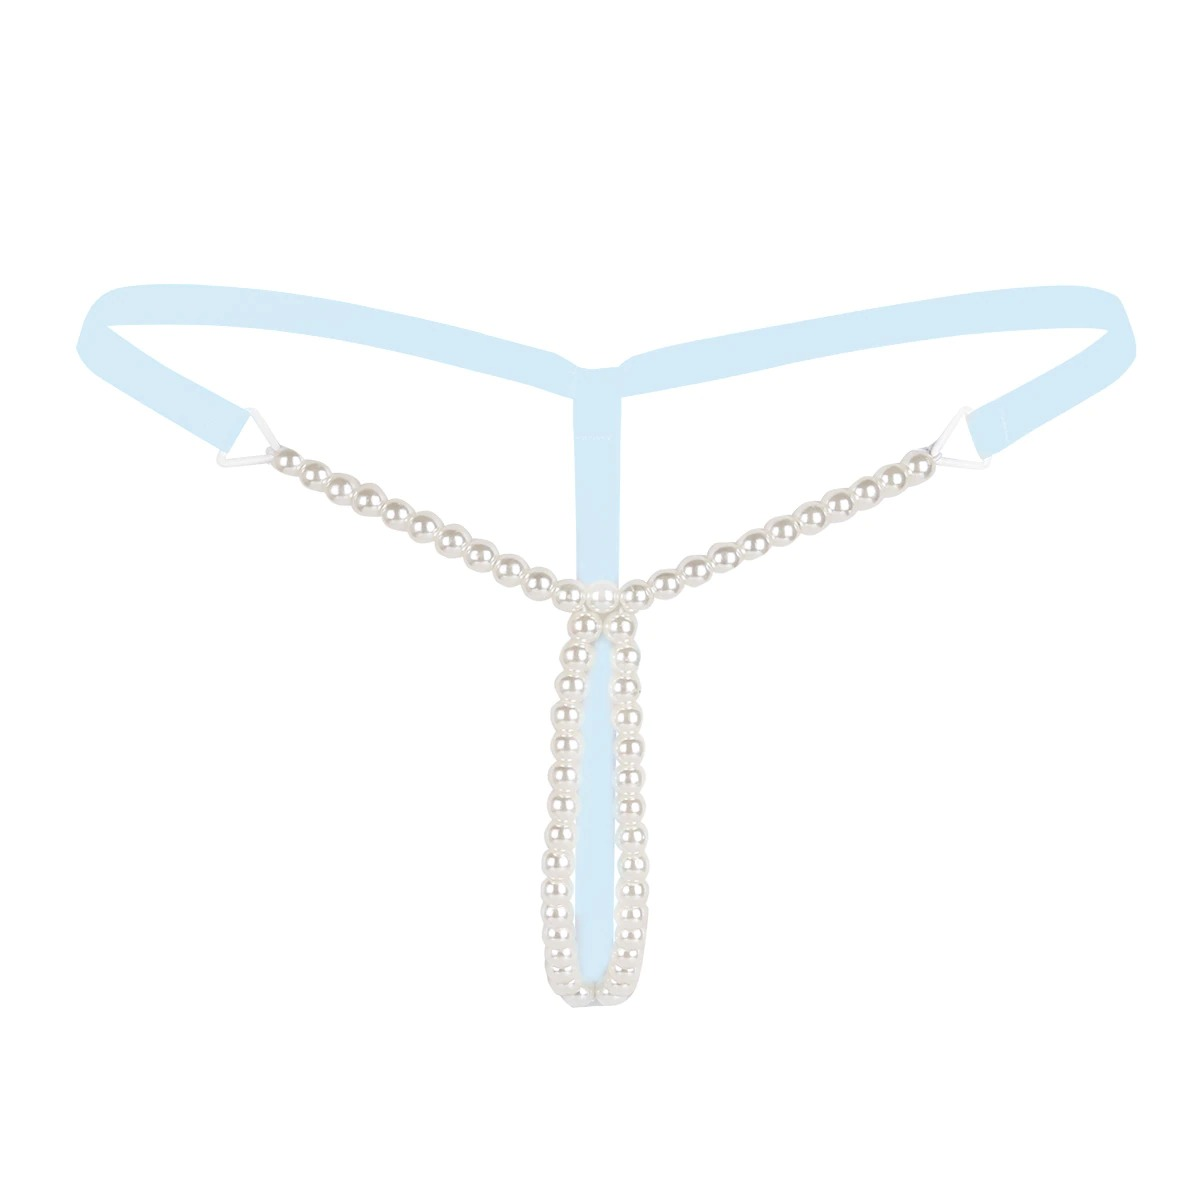 Women's Hot Erotic Lingerie / Mini Bikini with Pearls / Seductive Open Crotch Panties - EVE's SECRETS